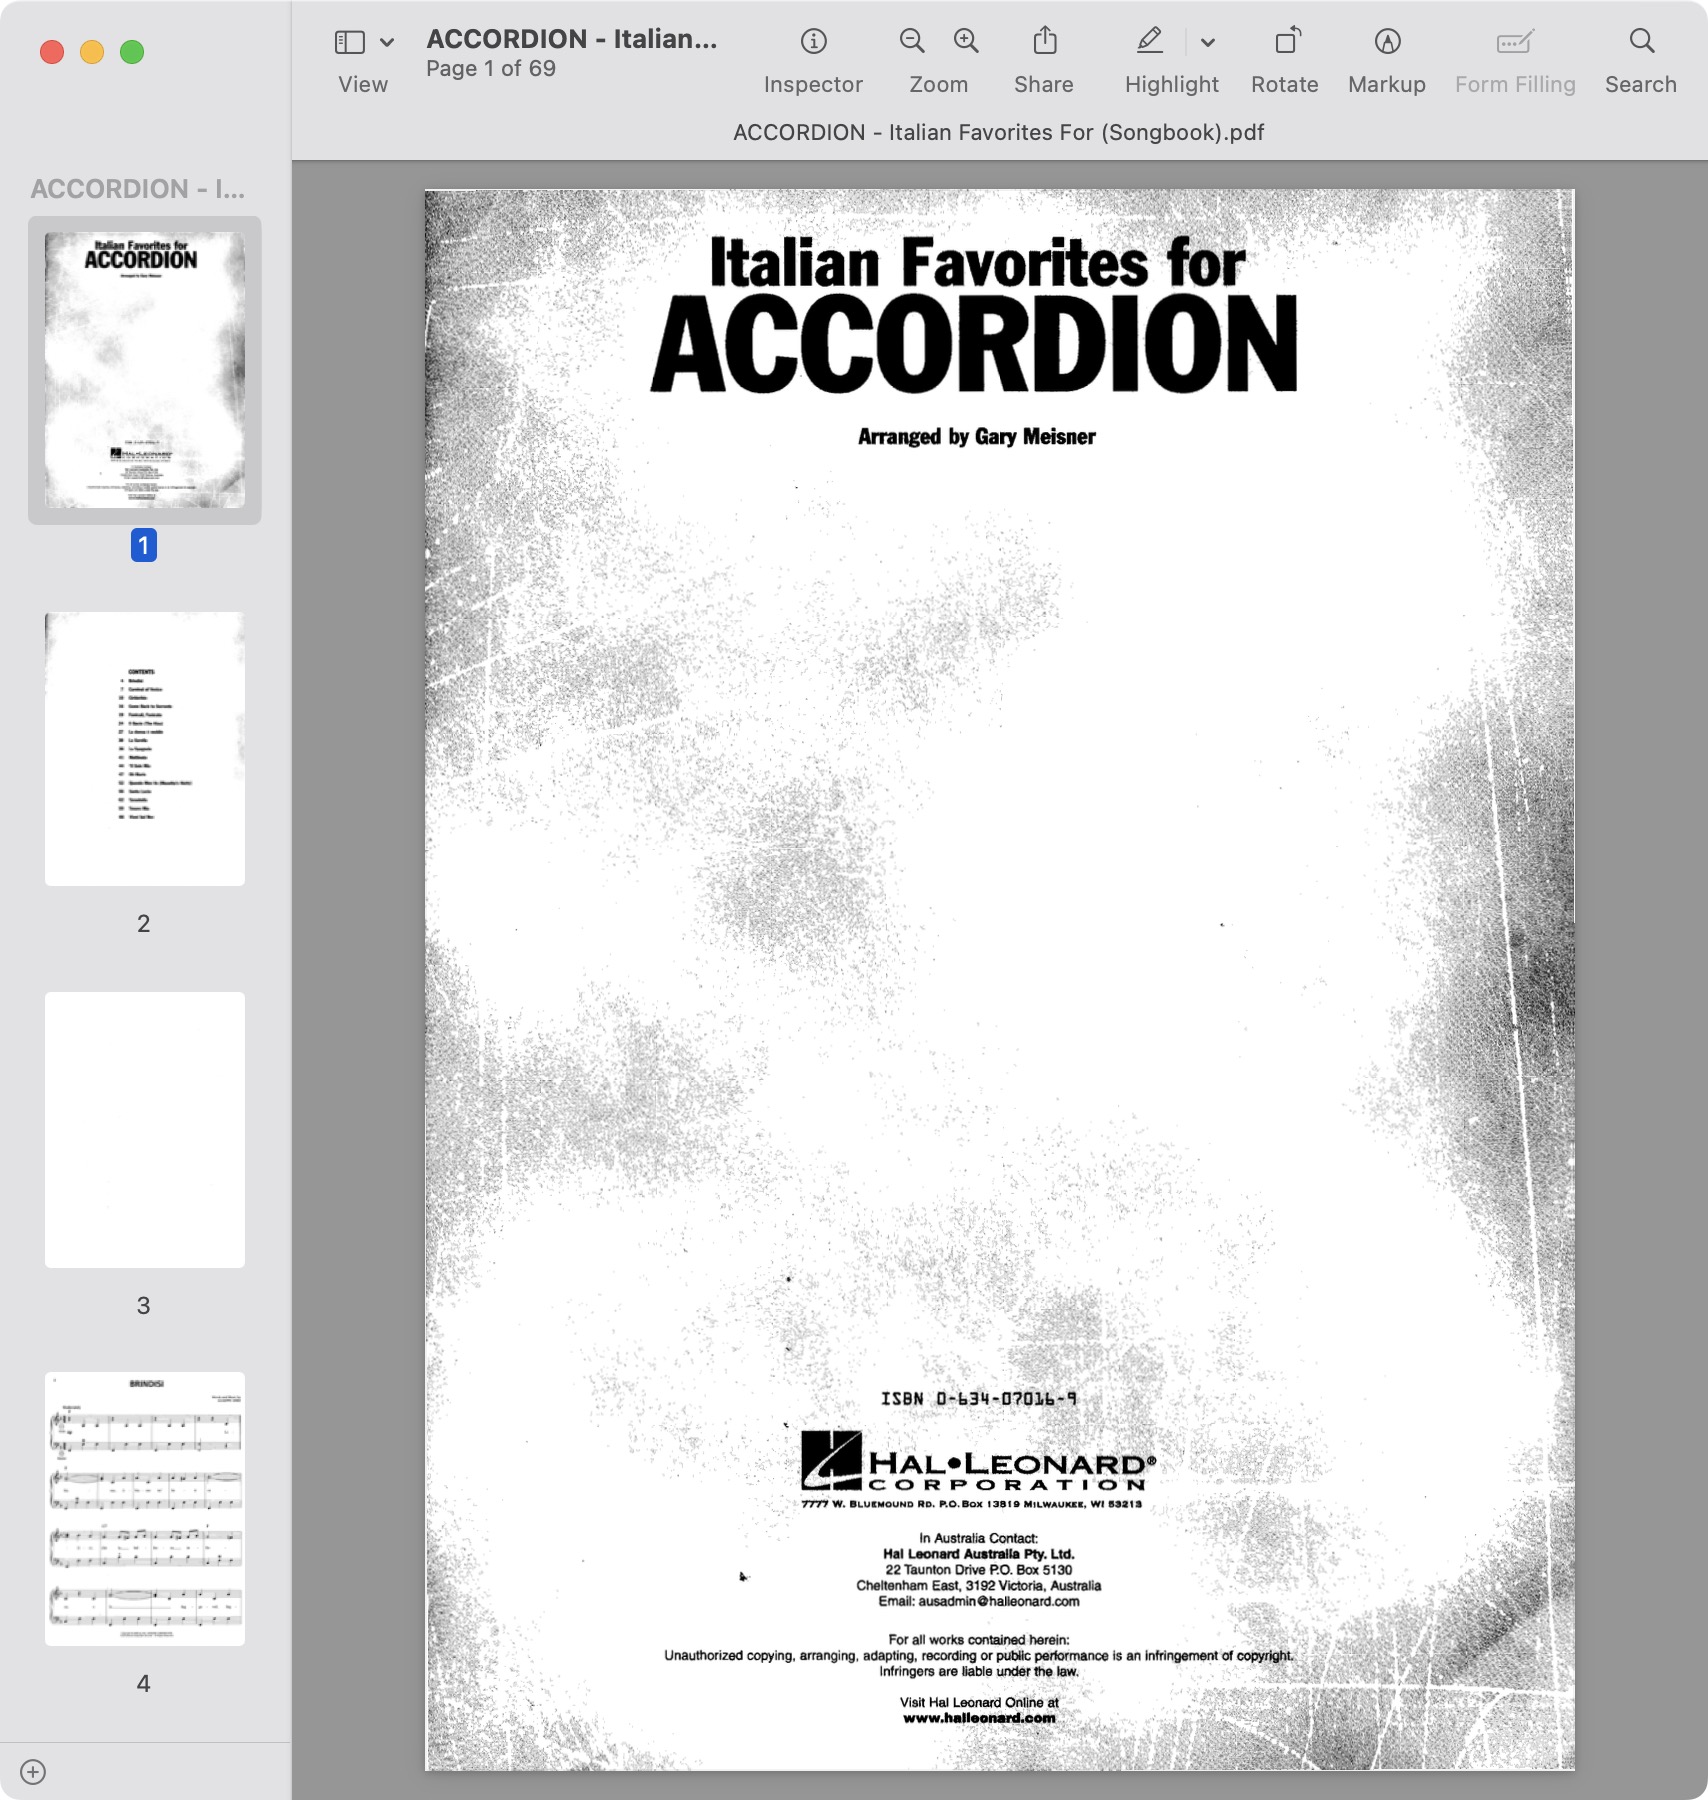 ACCORDION - Italian Favorites For (Songbook).jpg